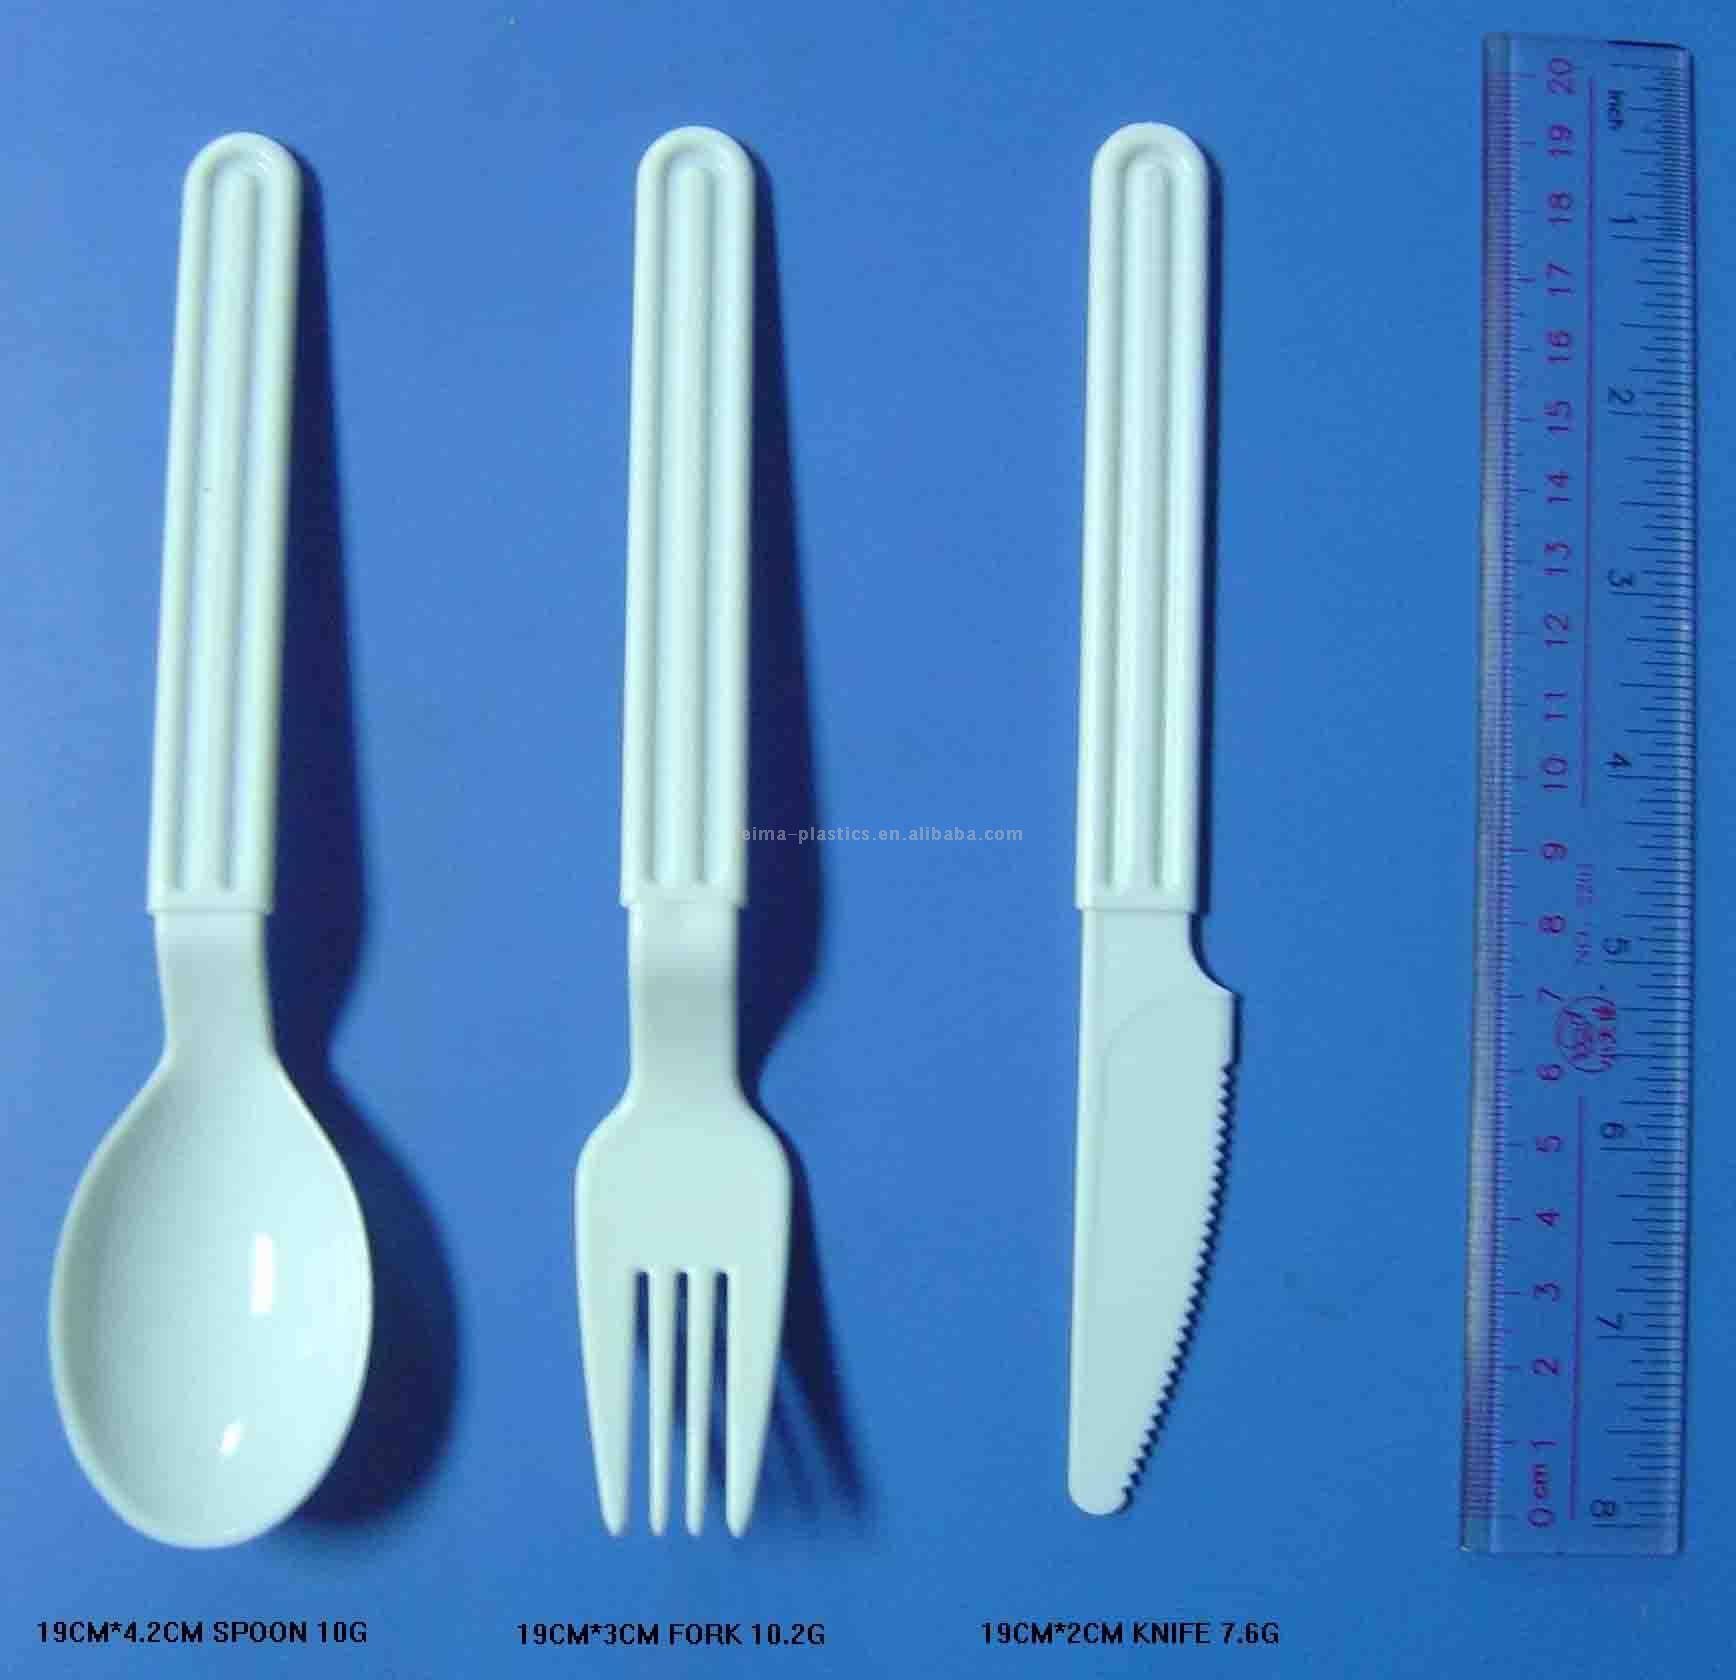  P2# Plastic Cutlery (P2 # Plastic Cutlery)